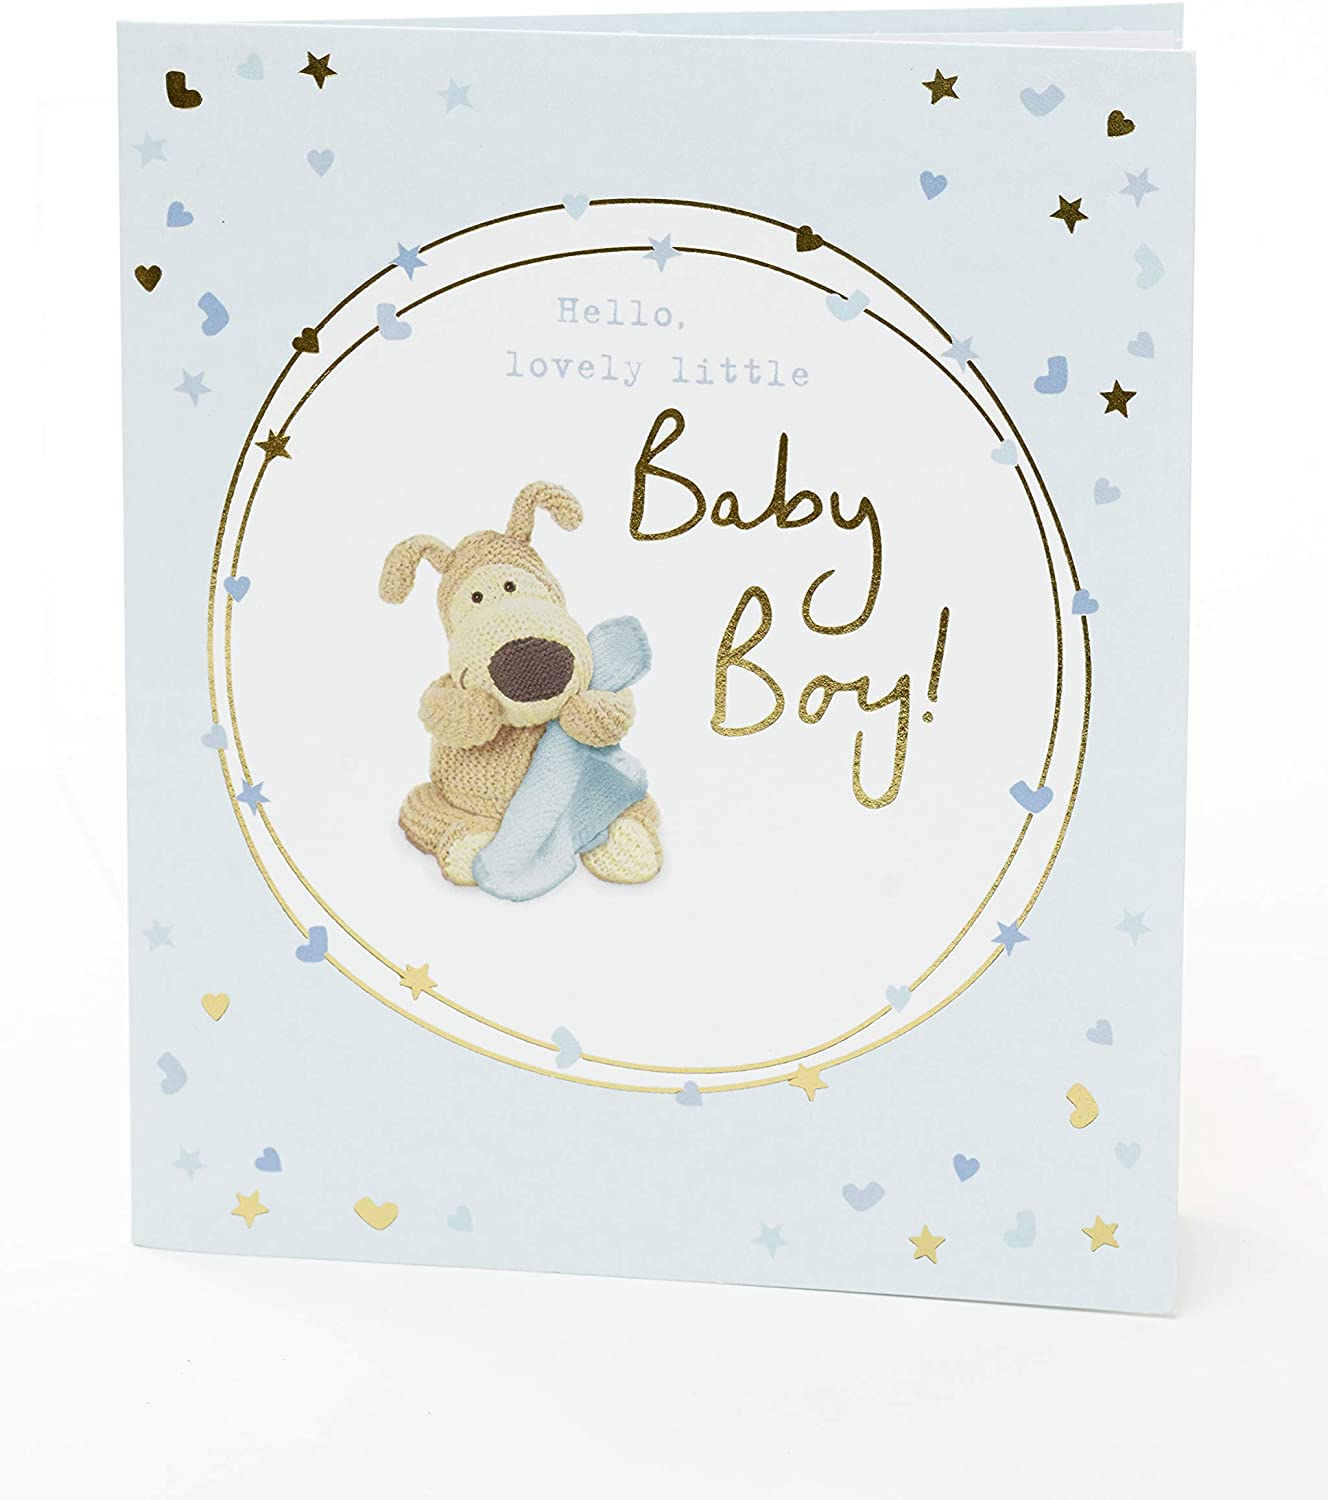 New Baby Boy Card - Baby Boy Boofles